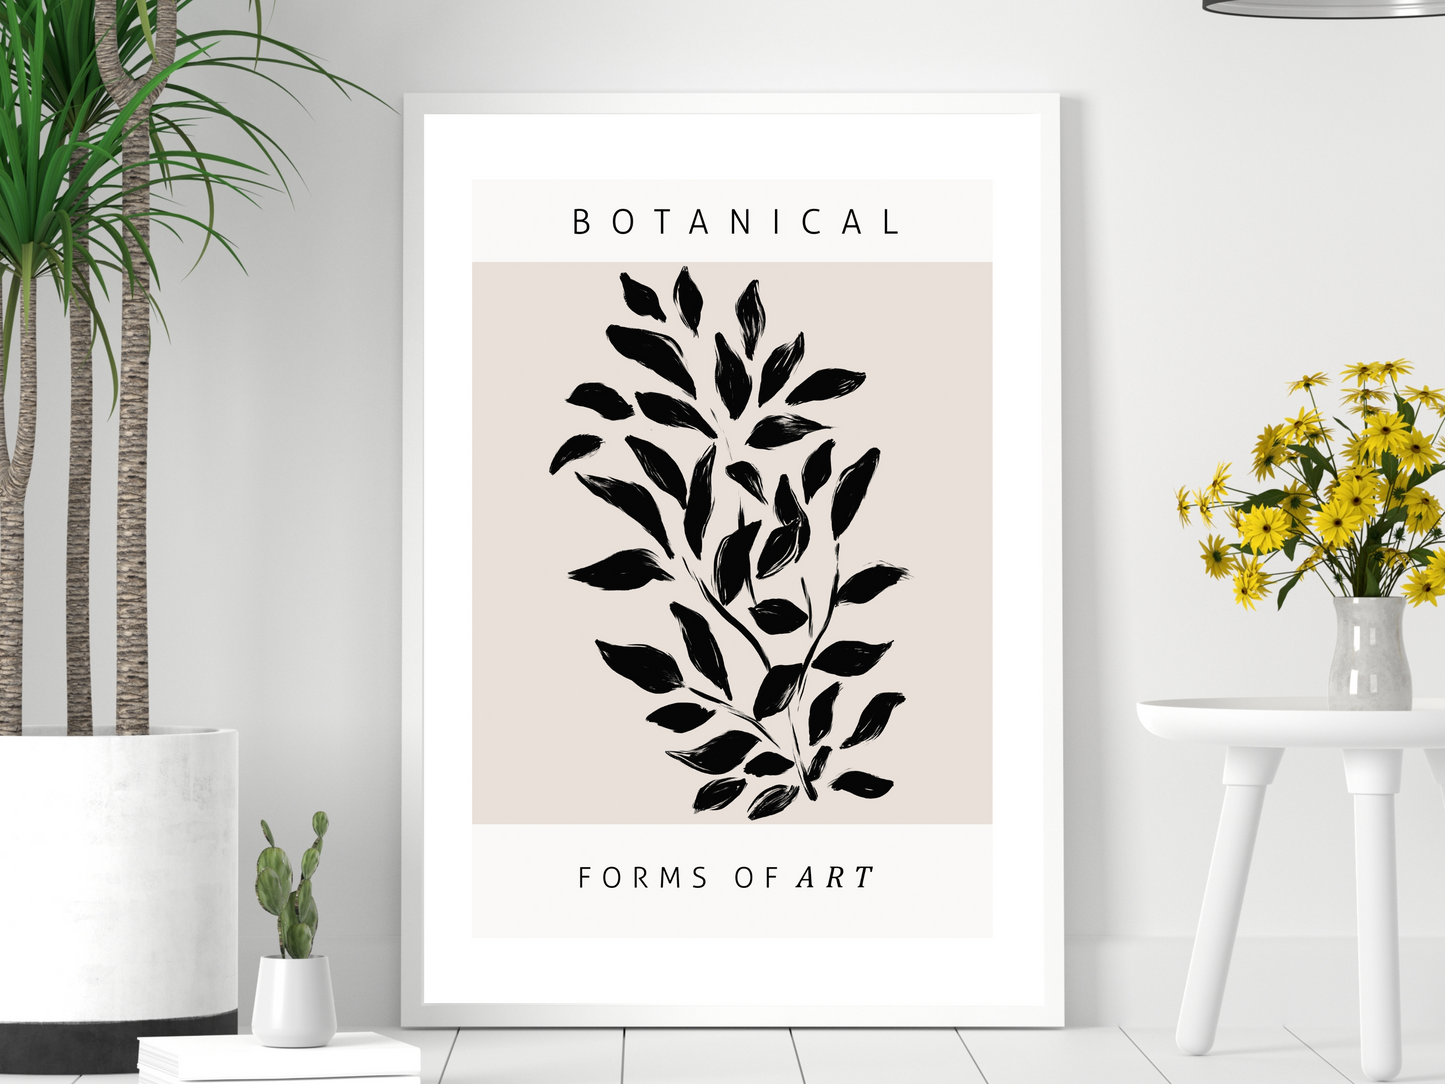 Botanical Forms of Art